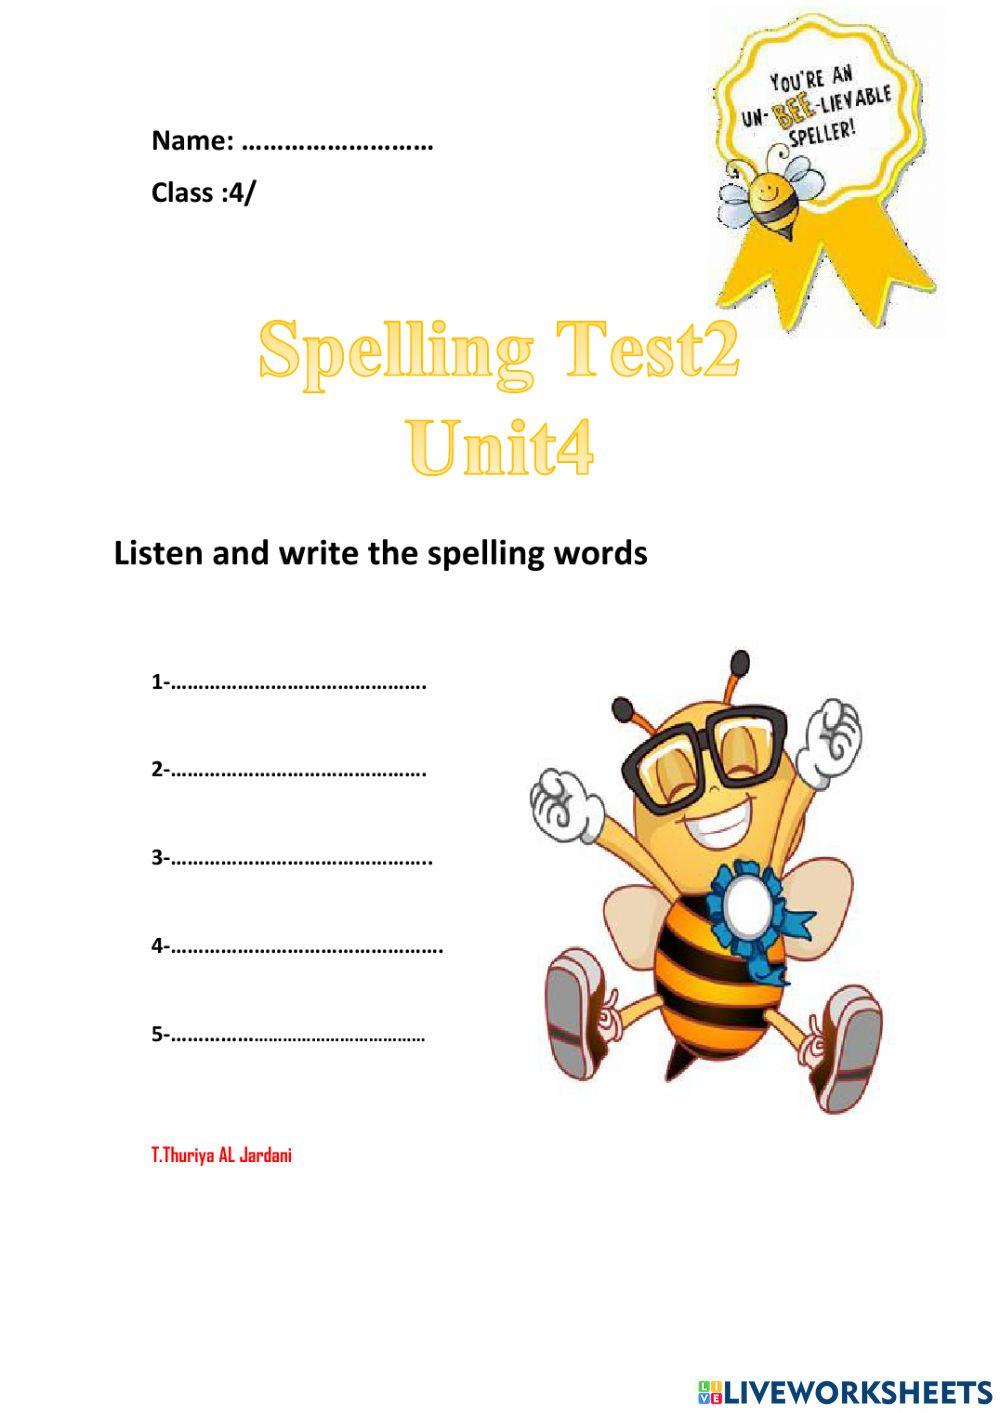 Spelling test 2u4